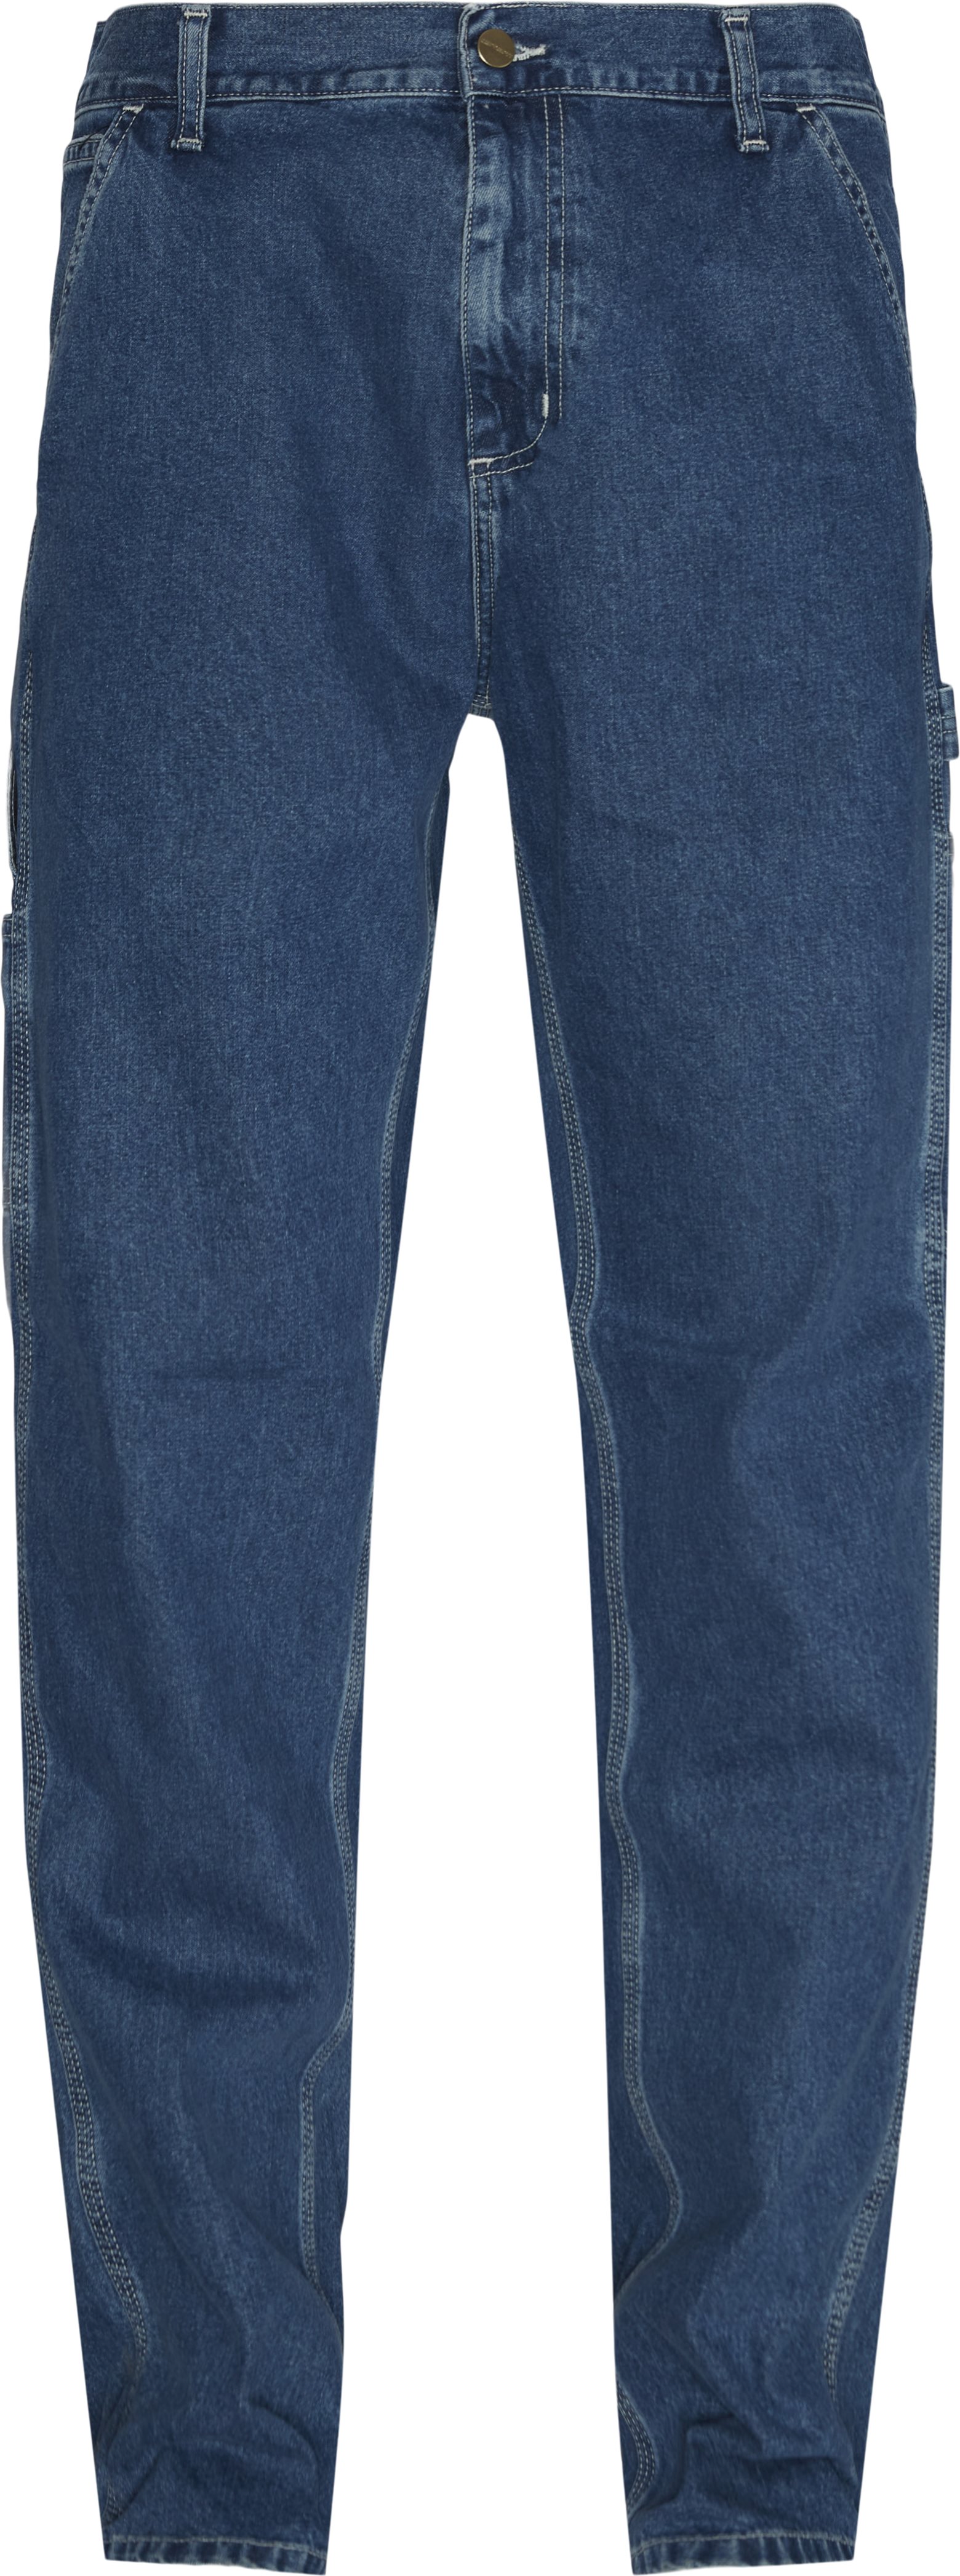 Ruck Single Knee Jeans - Jeans - Regular fit - Denim